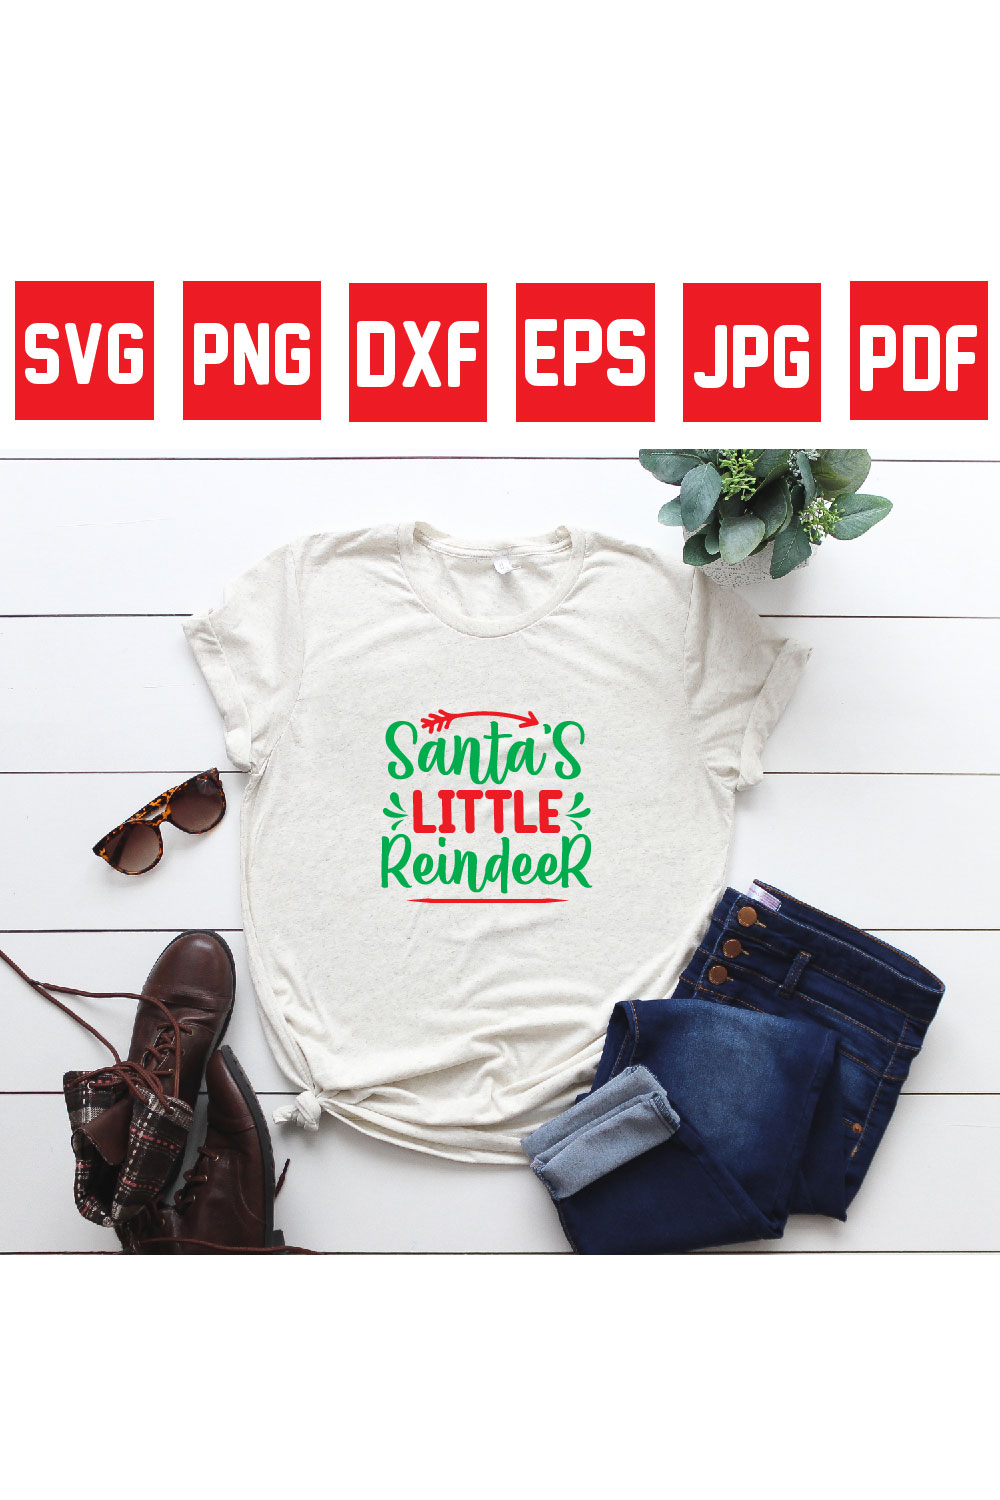 Santa’s Little Reindeer pinterest preview image.